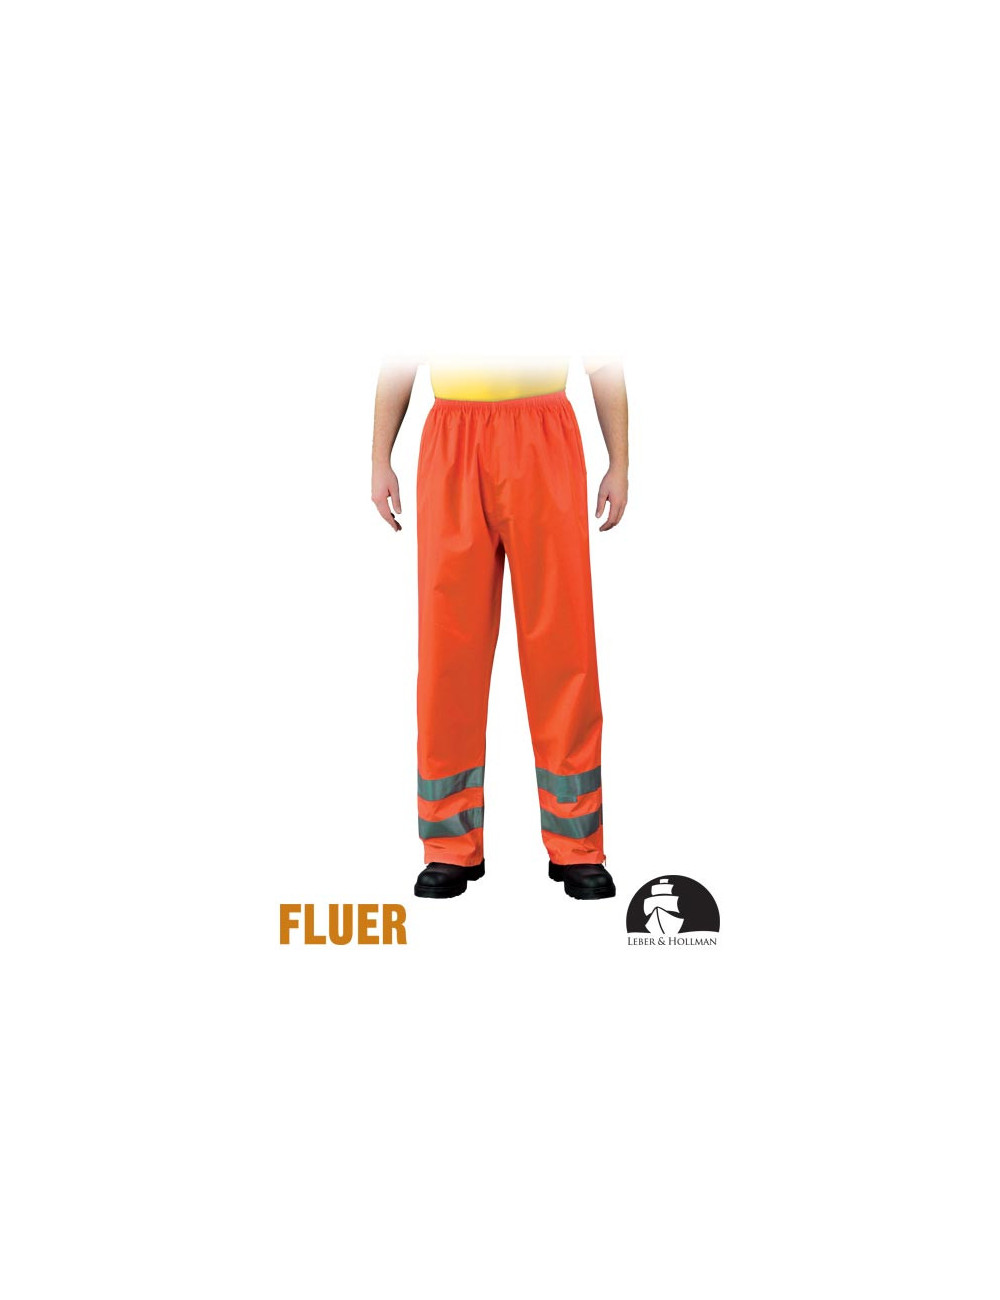 Spodnie ochronne do pasa lh-fluer-t p pomarańczowy Leber&hollman